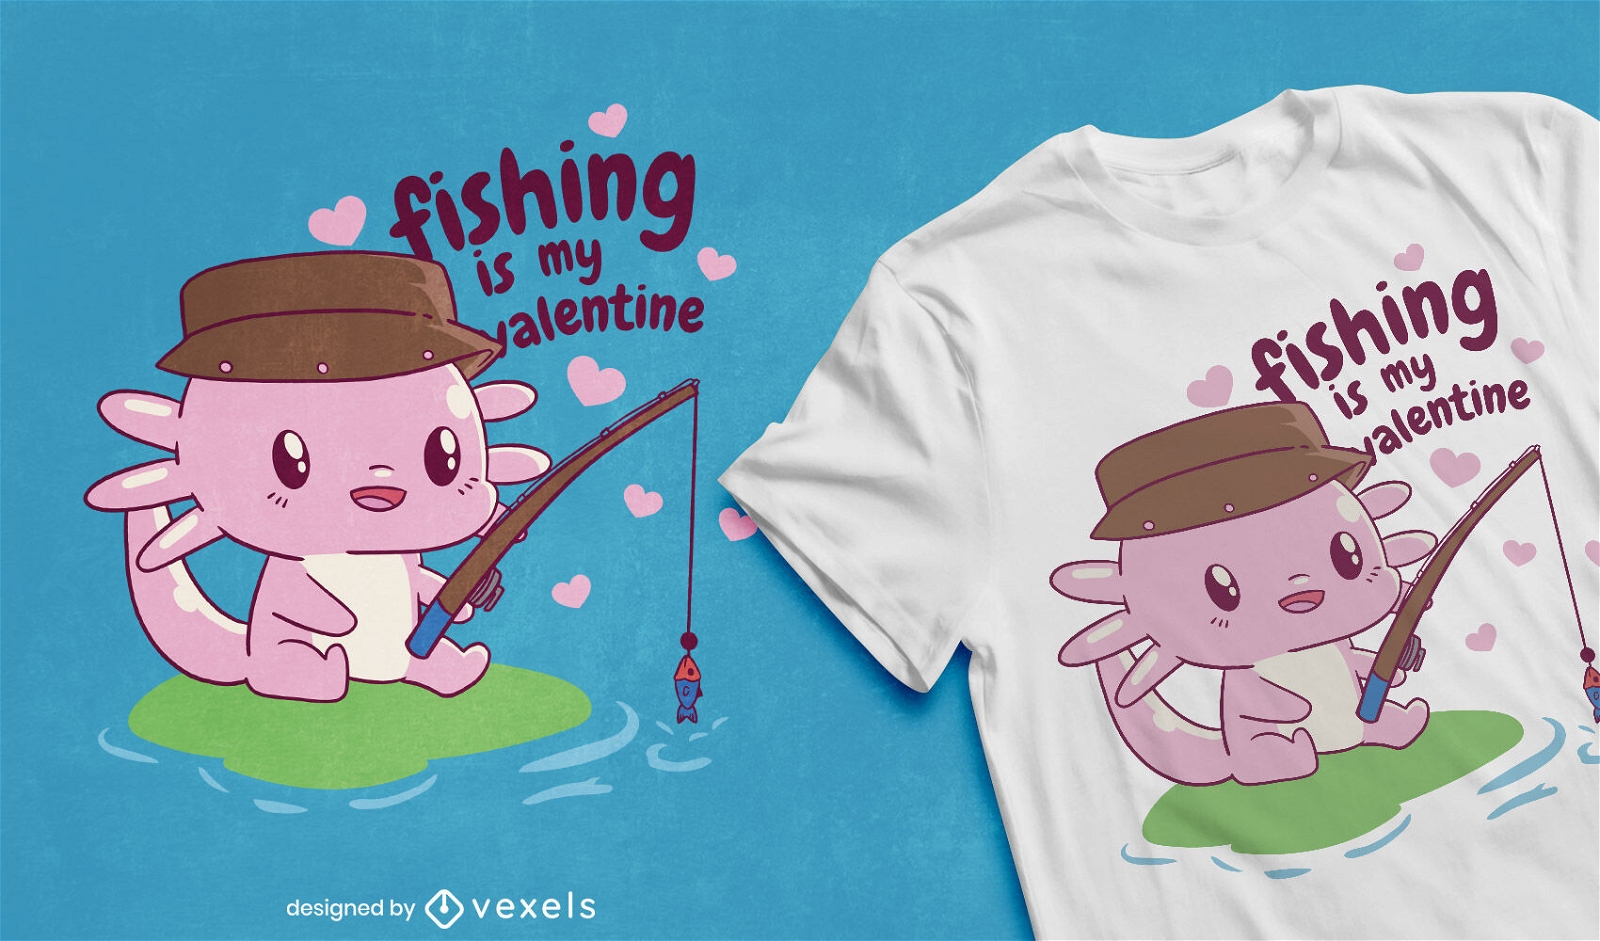 Fishing is my valentine axolotl t-shirt design